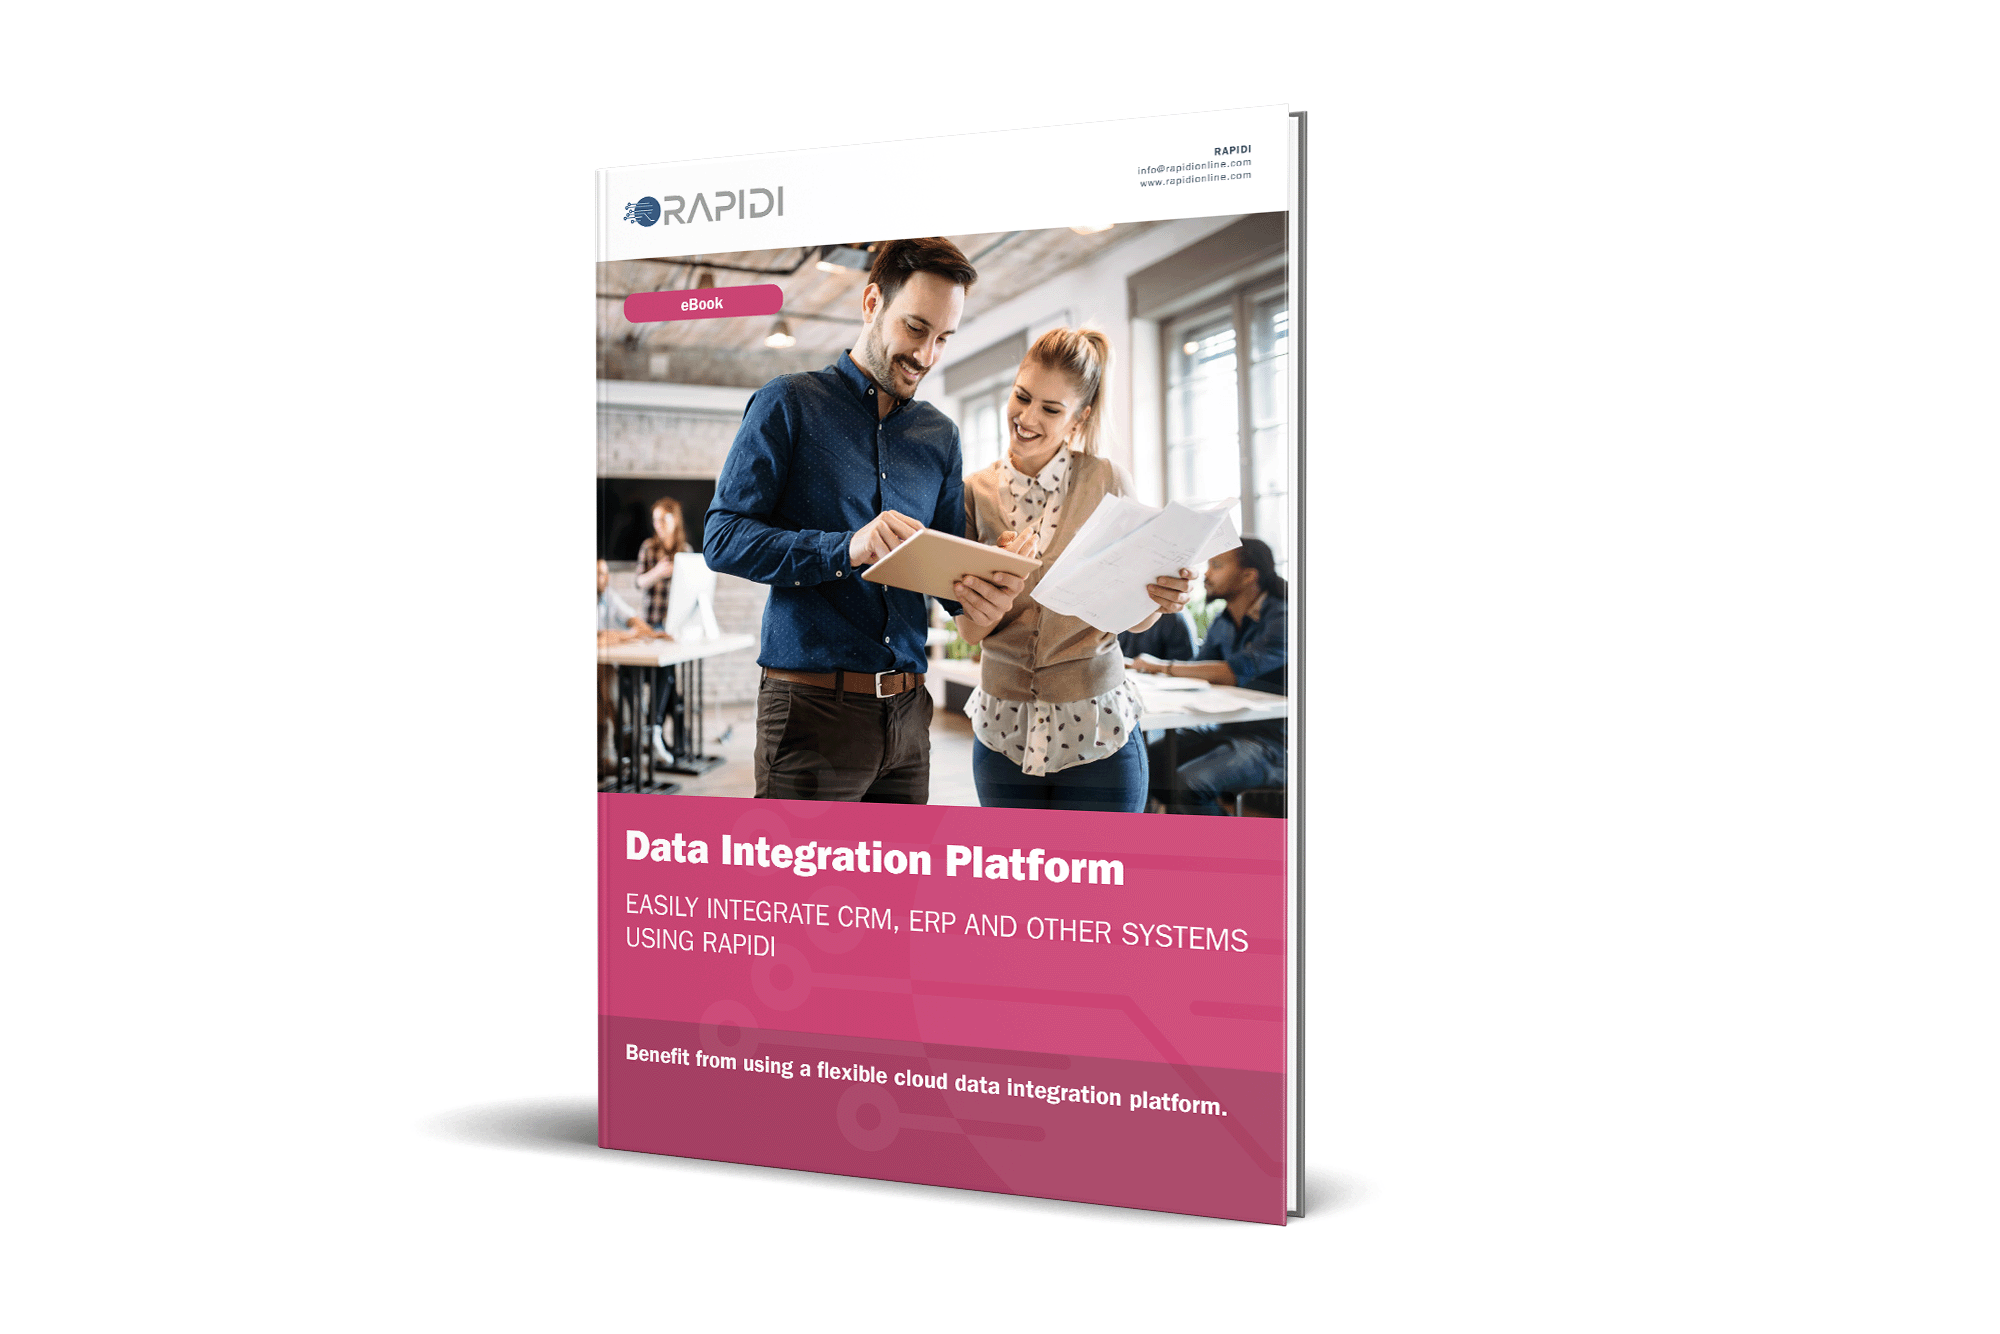 Data-Integration-Platform Guide